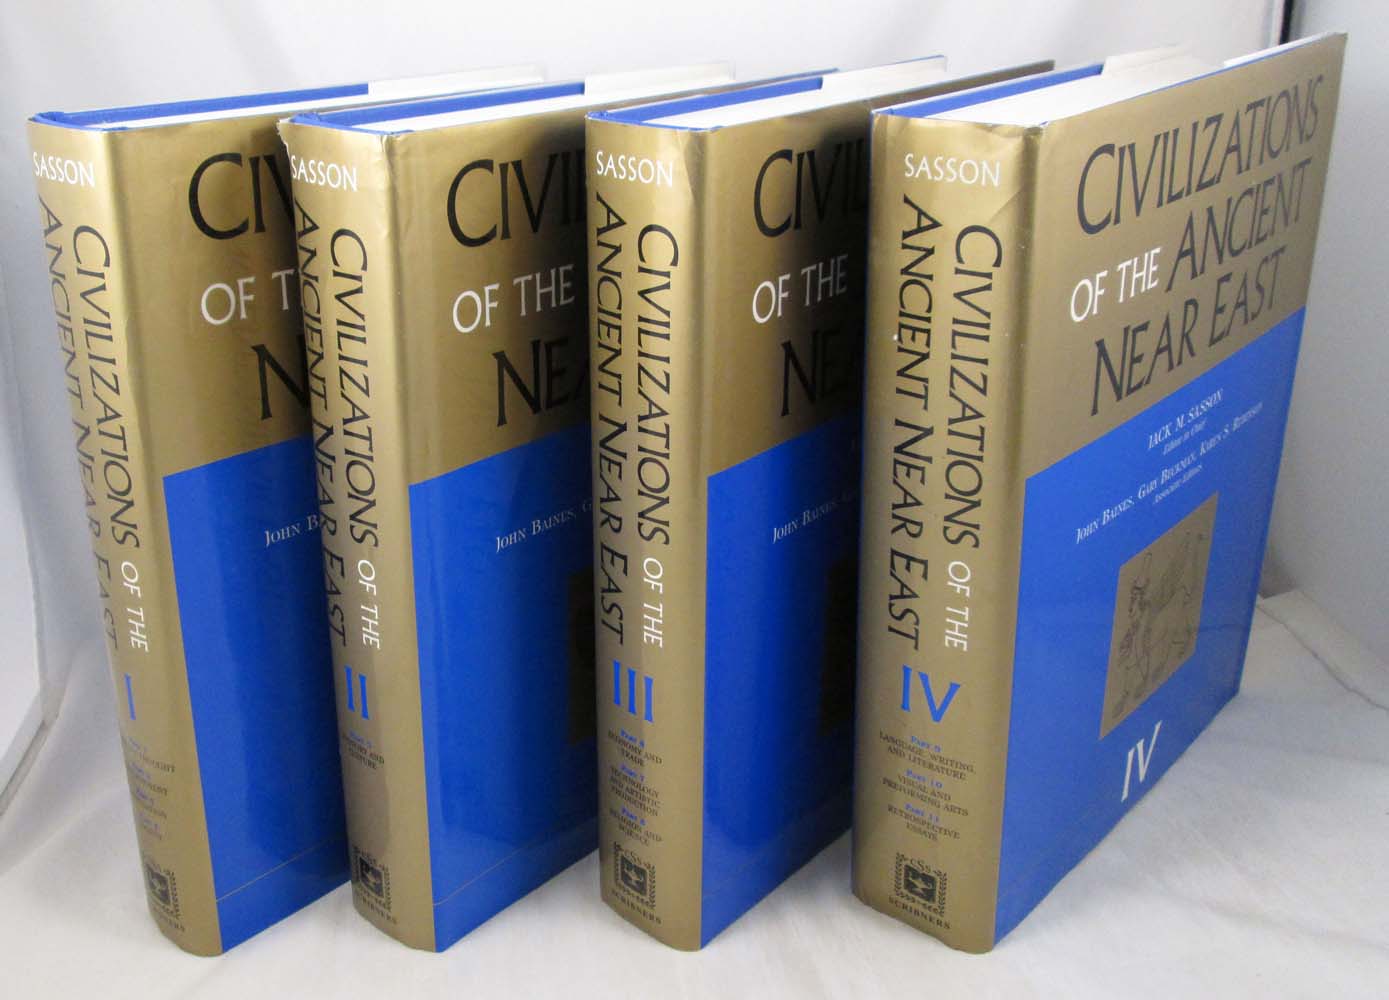 Civilizations of the Ancient Near East (4 Vols)